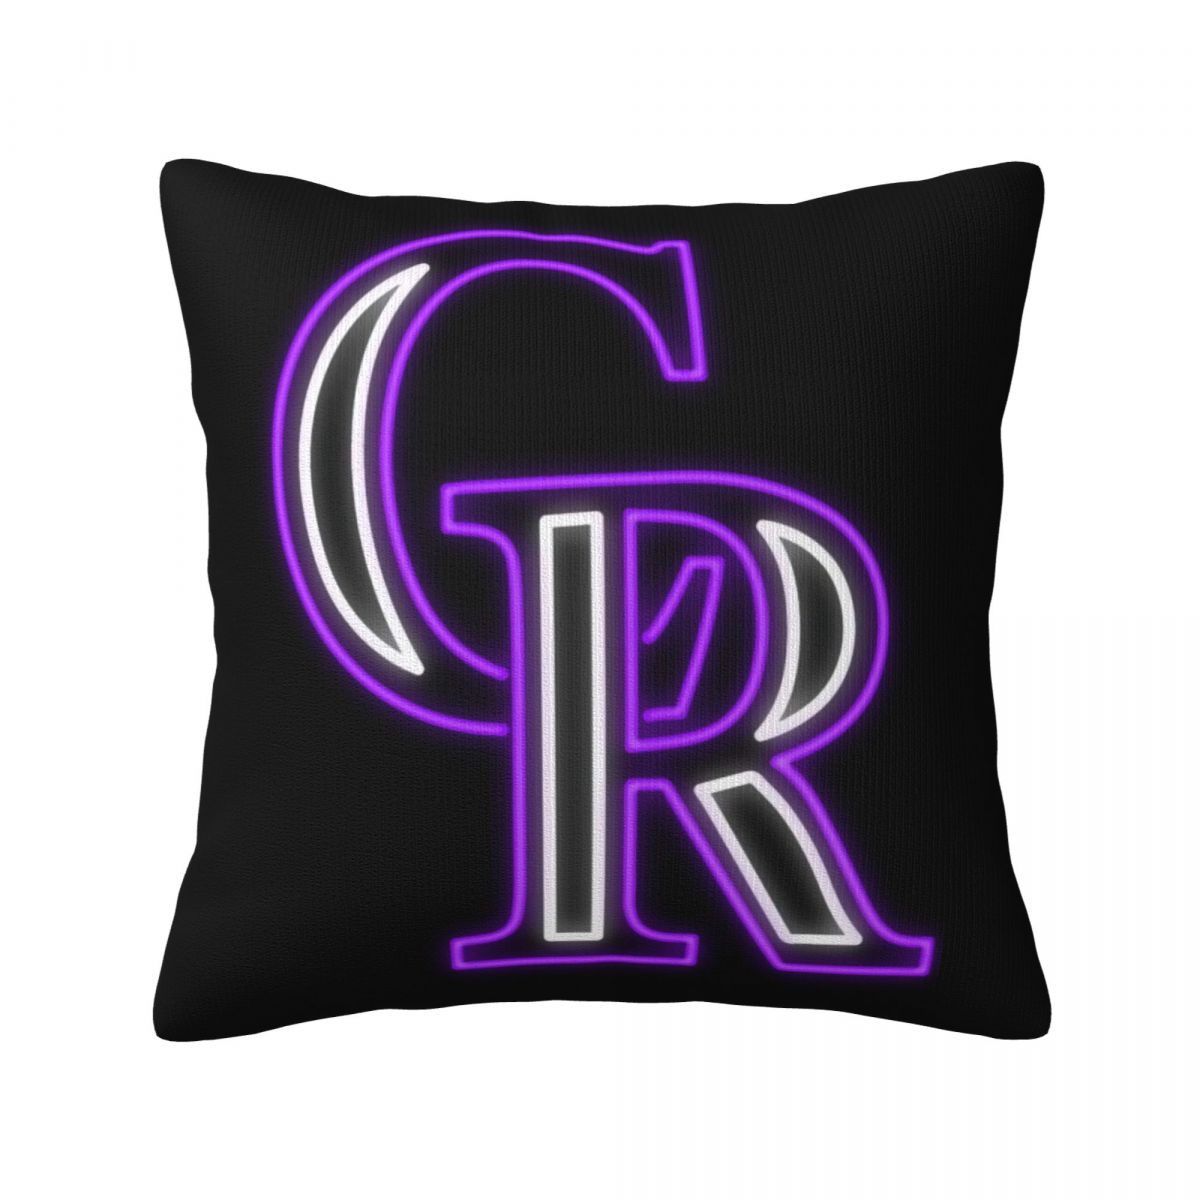 Colorado Rockies Neon Purple Decorative Square Throw Pillow Covers